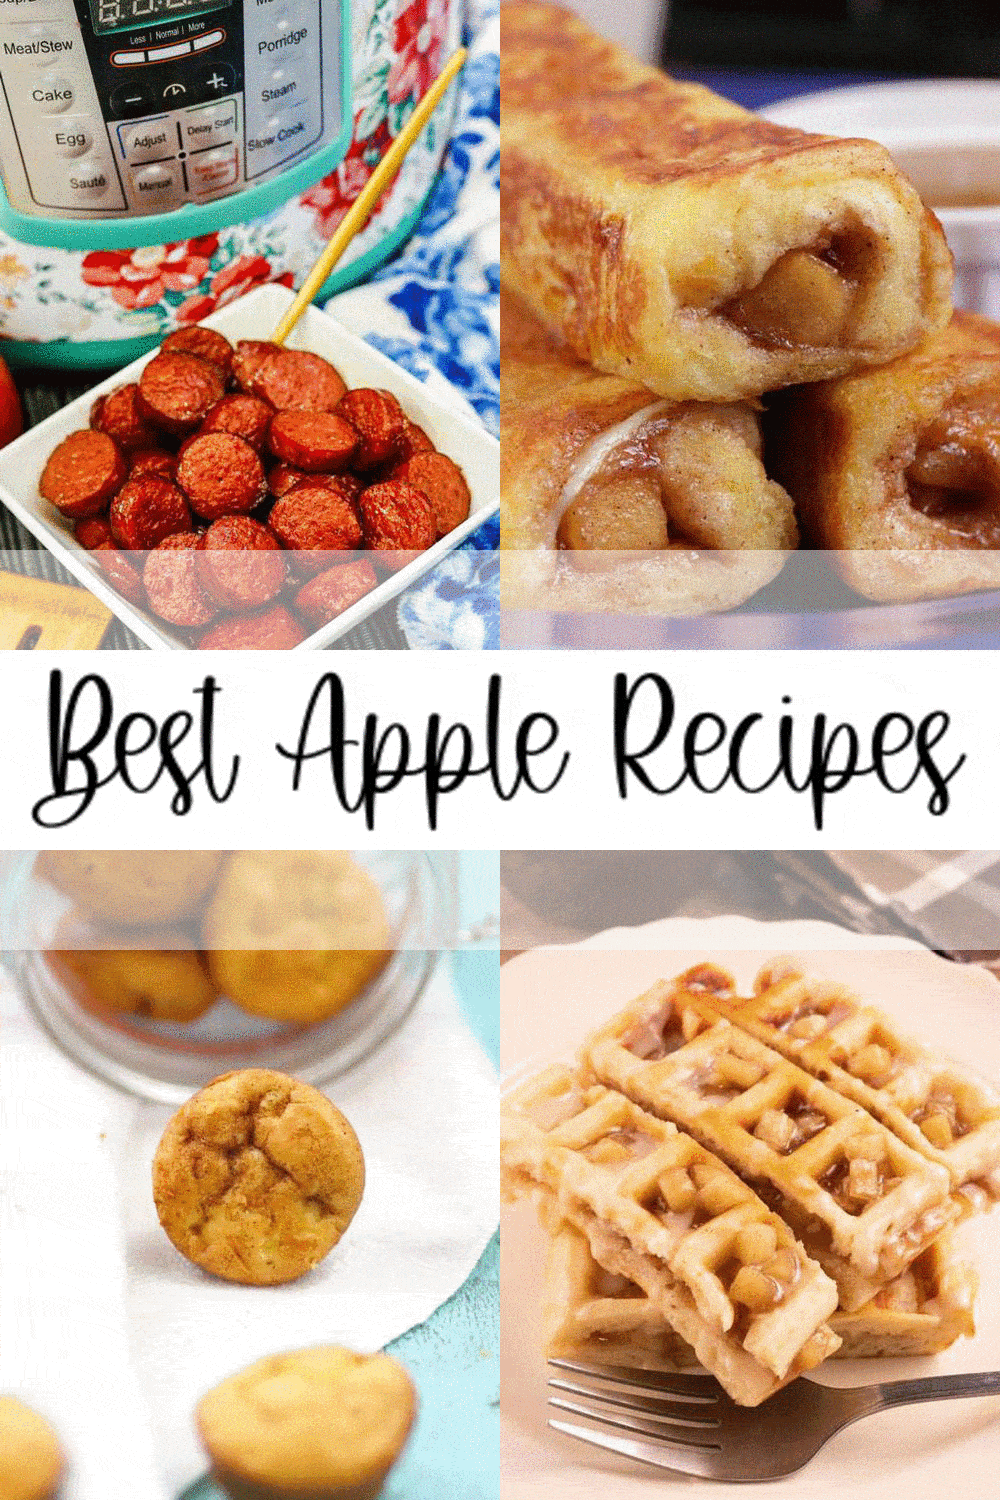 8 Apple Recipes - Best Apple Ideas